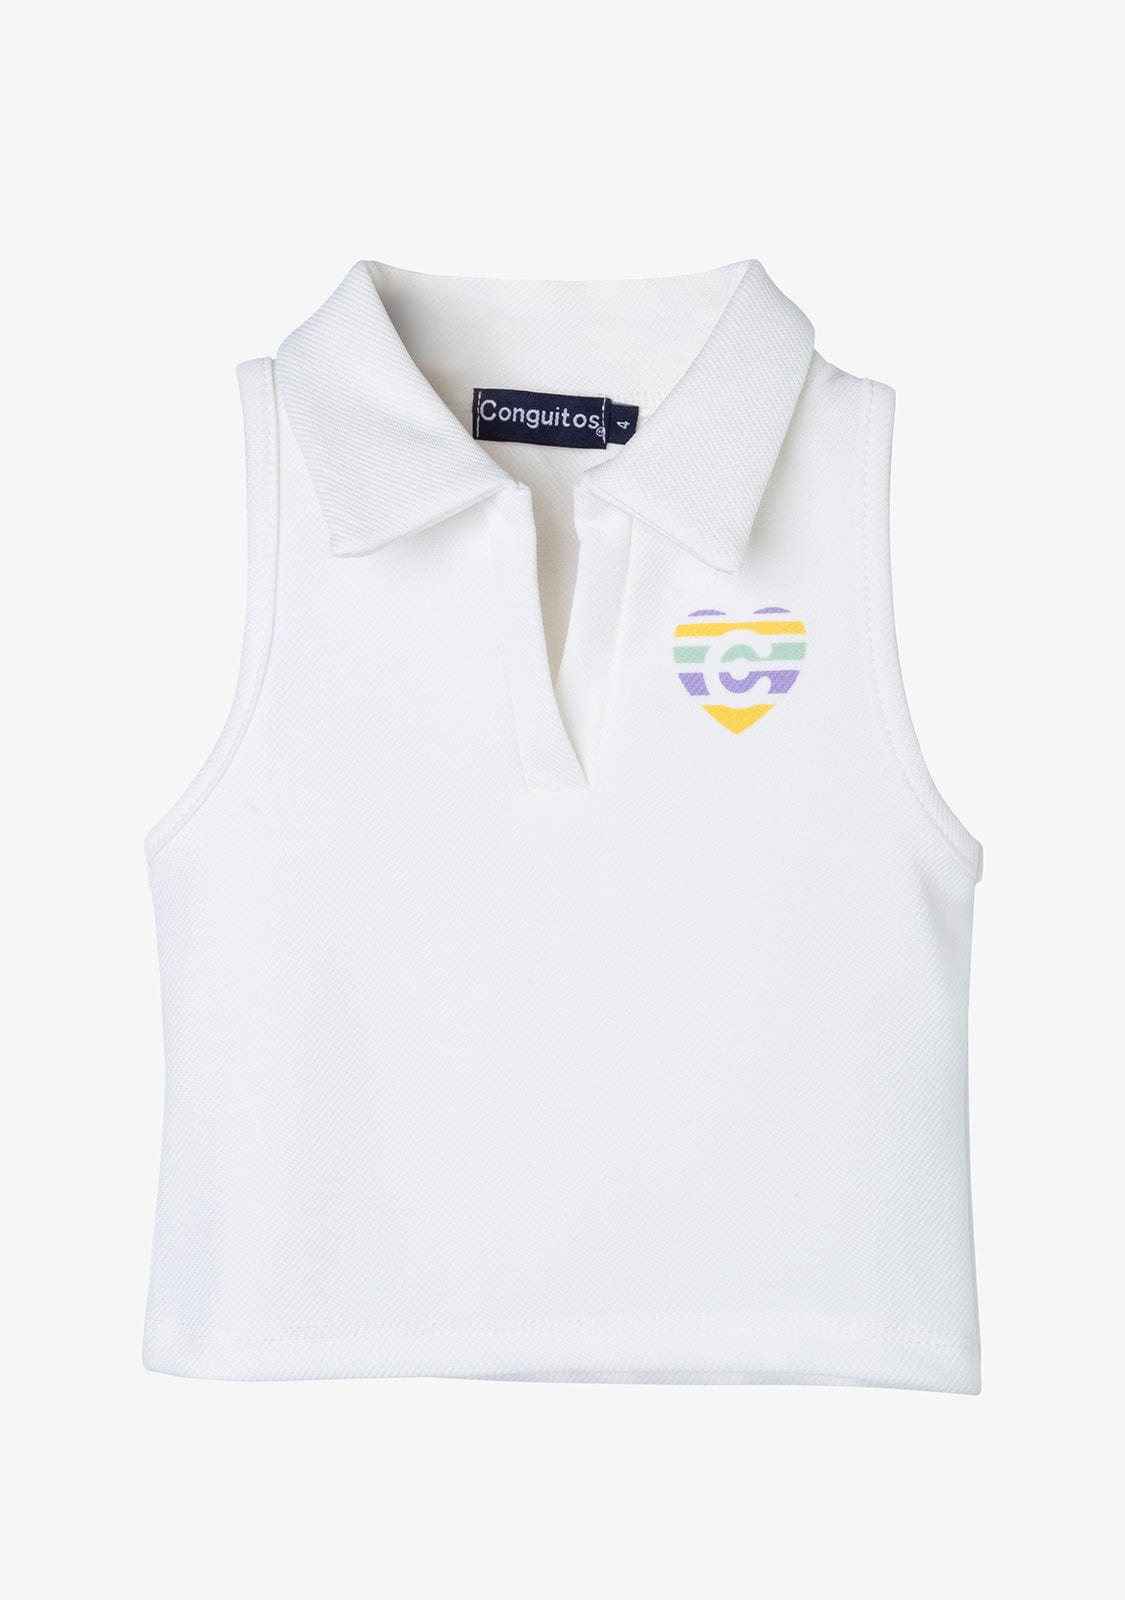 CONGUITOS TEXTIL Clothing Girl's White Sleeveless Polo T-shirt